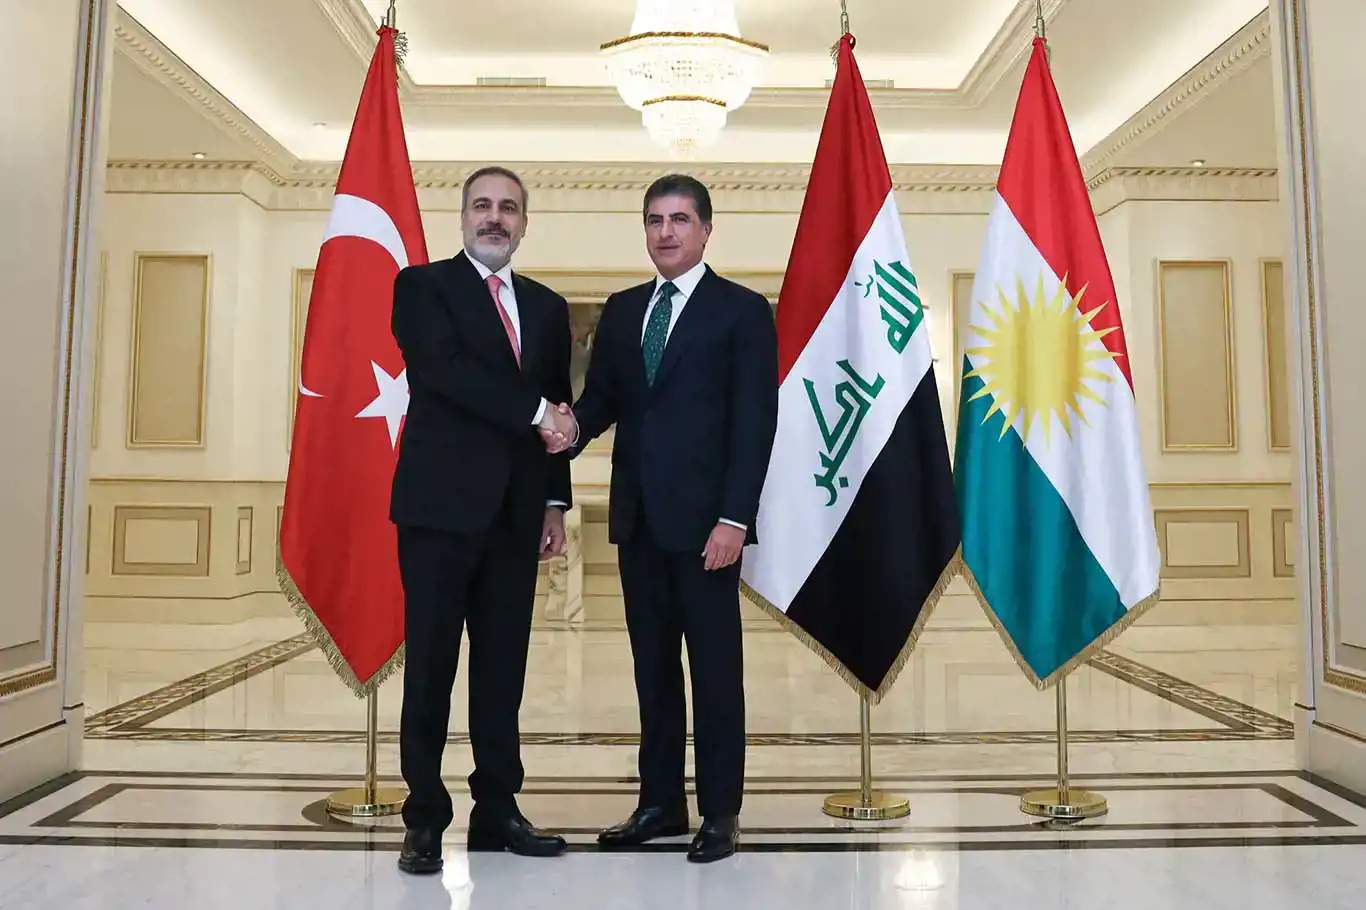 Türkiye's Foreign Minister holds talks with Kurdish President during visit to Erbil